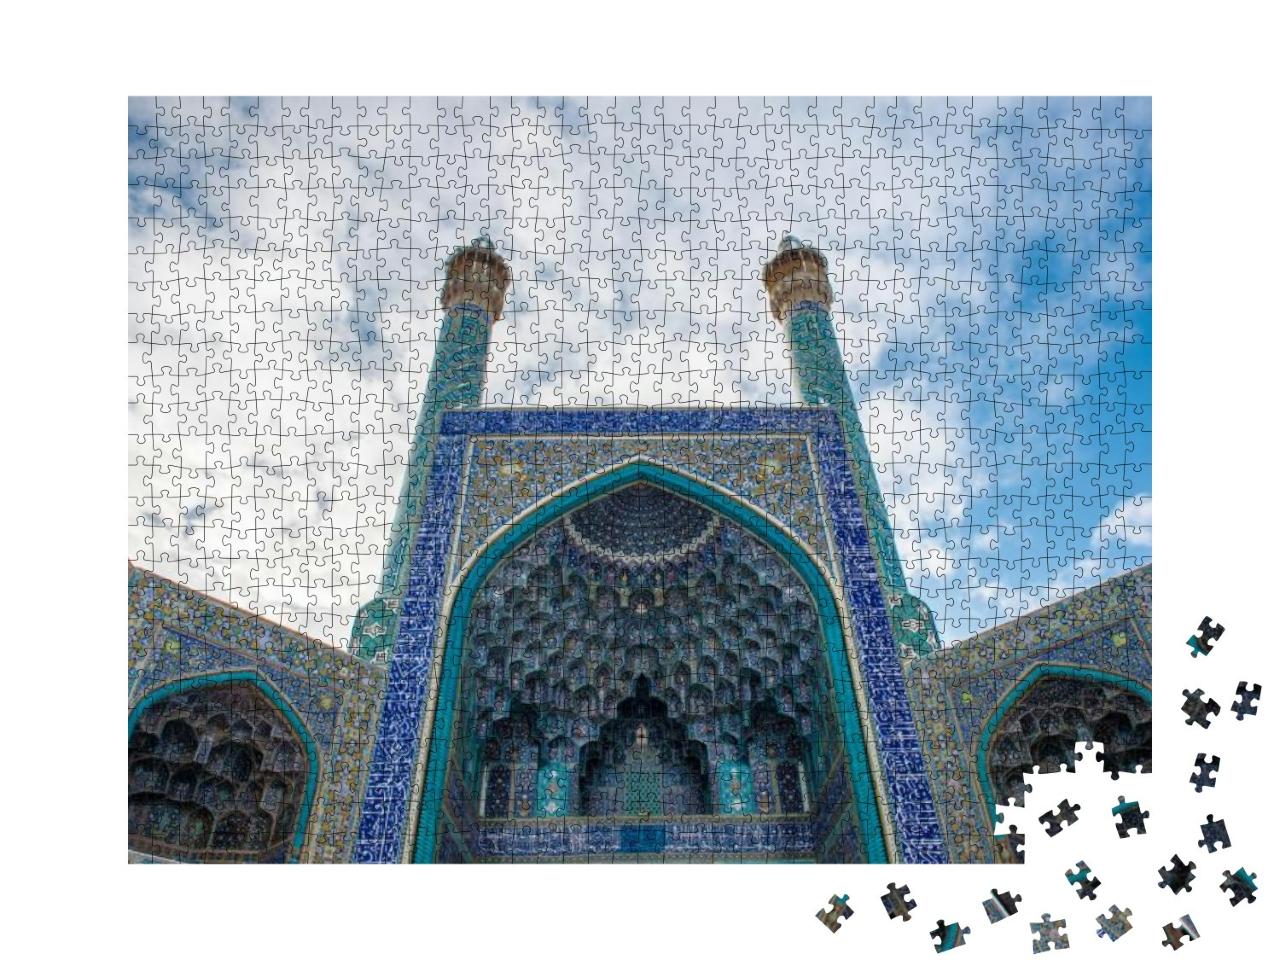 Puzzle 1000 Teile „Eingang zur Schah-Moschee in Isfahan, Iran“